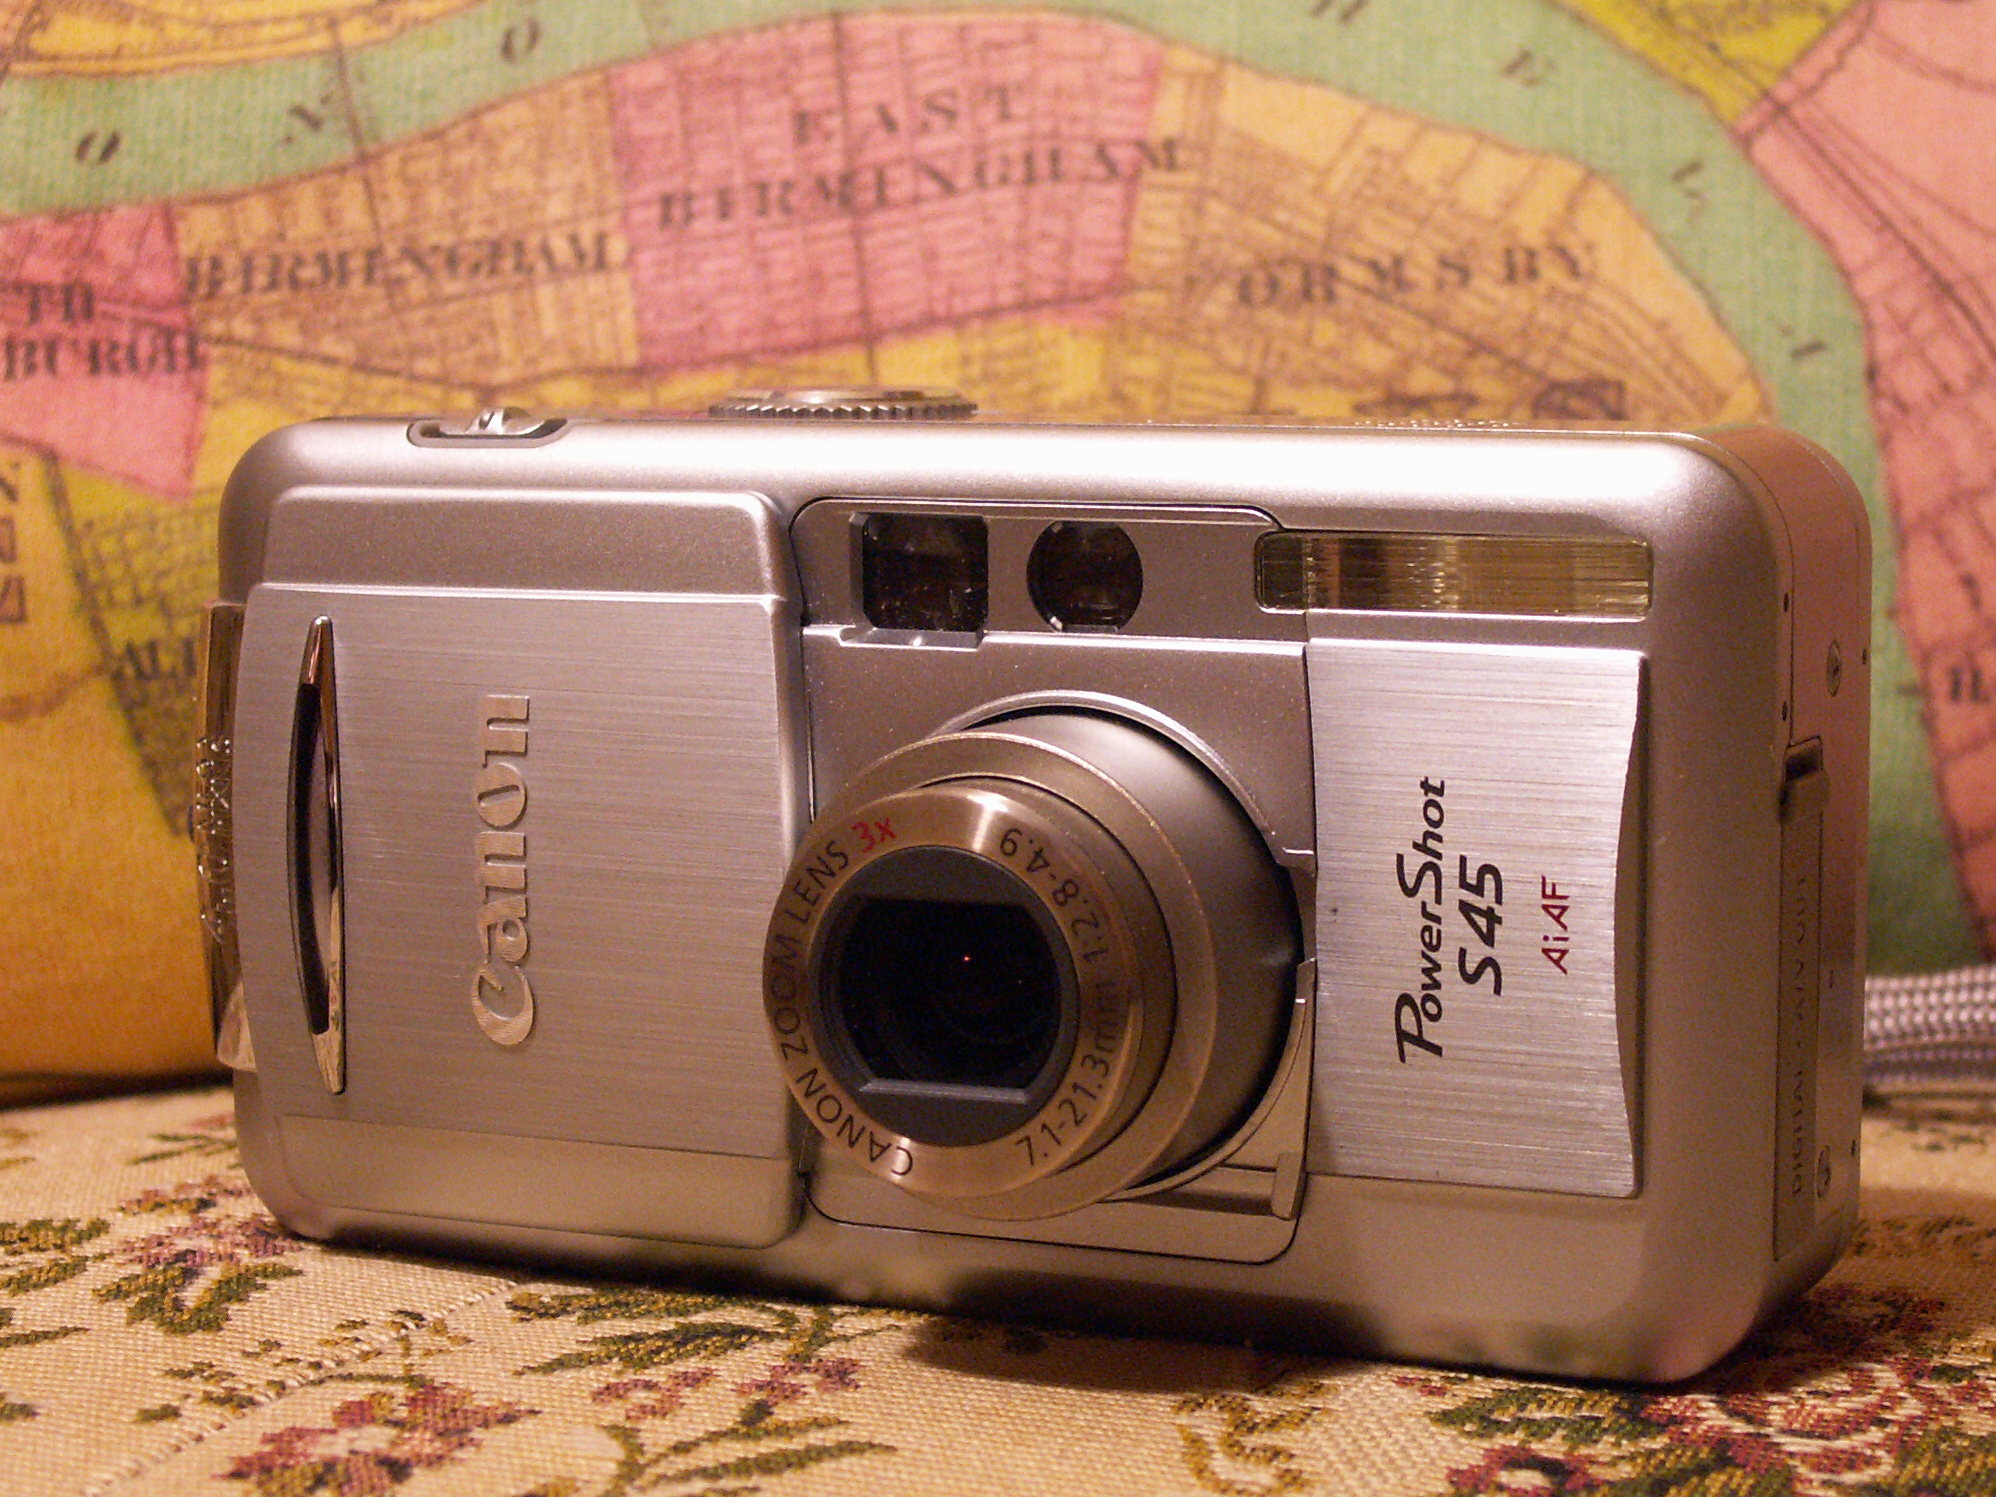 groei Aanhankelijk lineair File:Canon PowerShot S45 digital camera.jpg - Wikimedia Commons